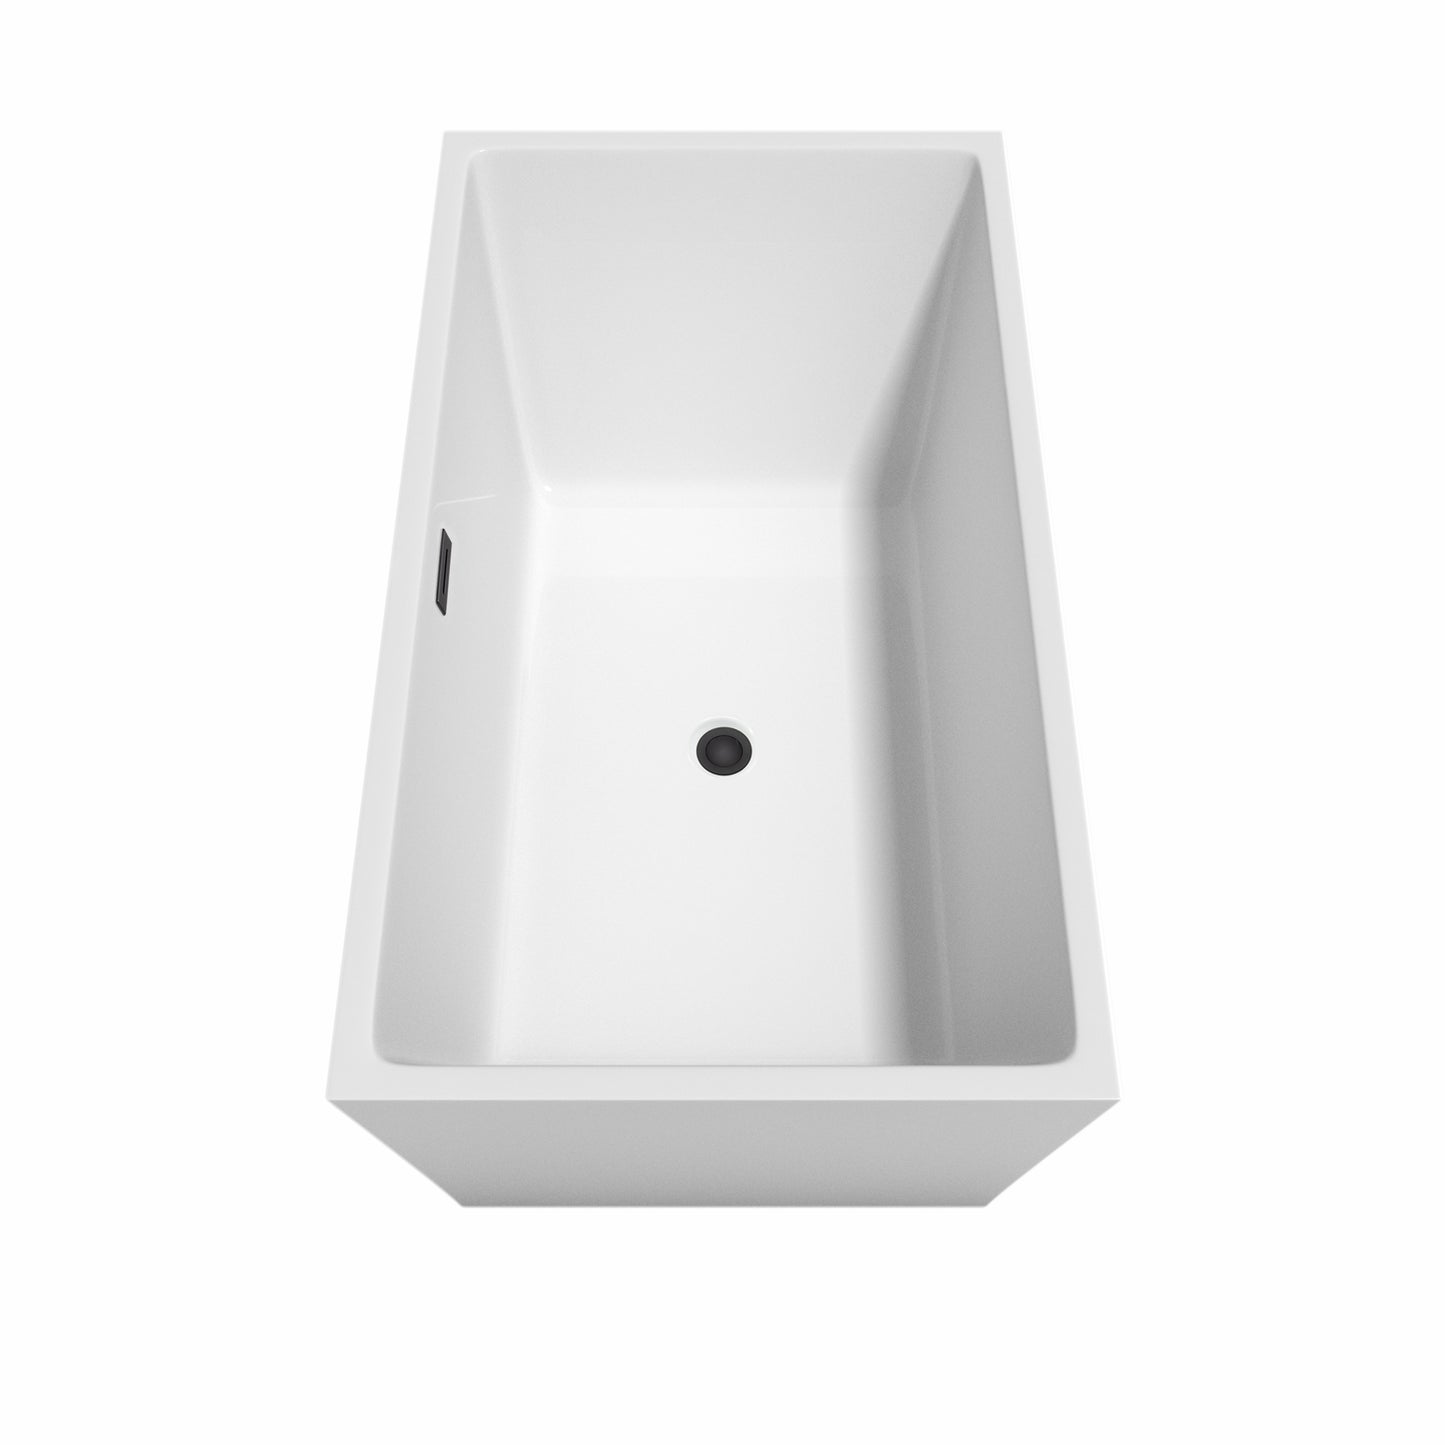 Wyndham Collection Sara Freestanding Bathtub in White with Matte Black Drain and Overflow Trim - Luxe Bathroom Vanities